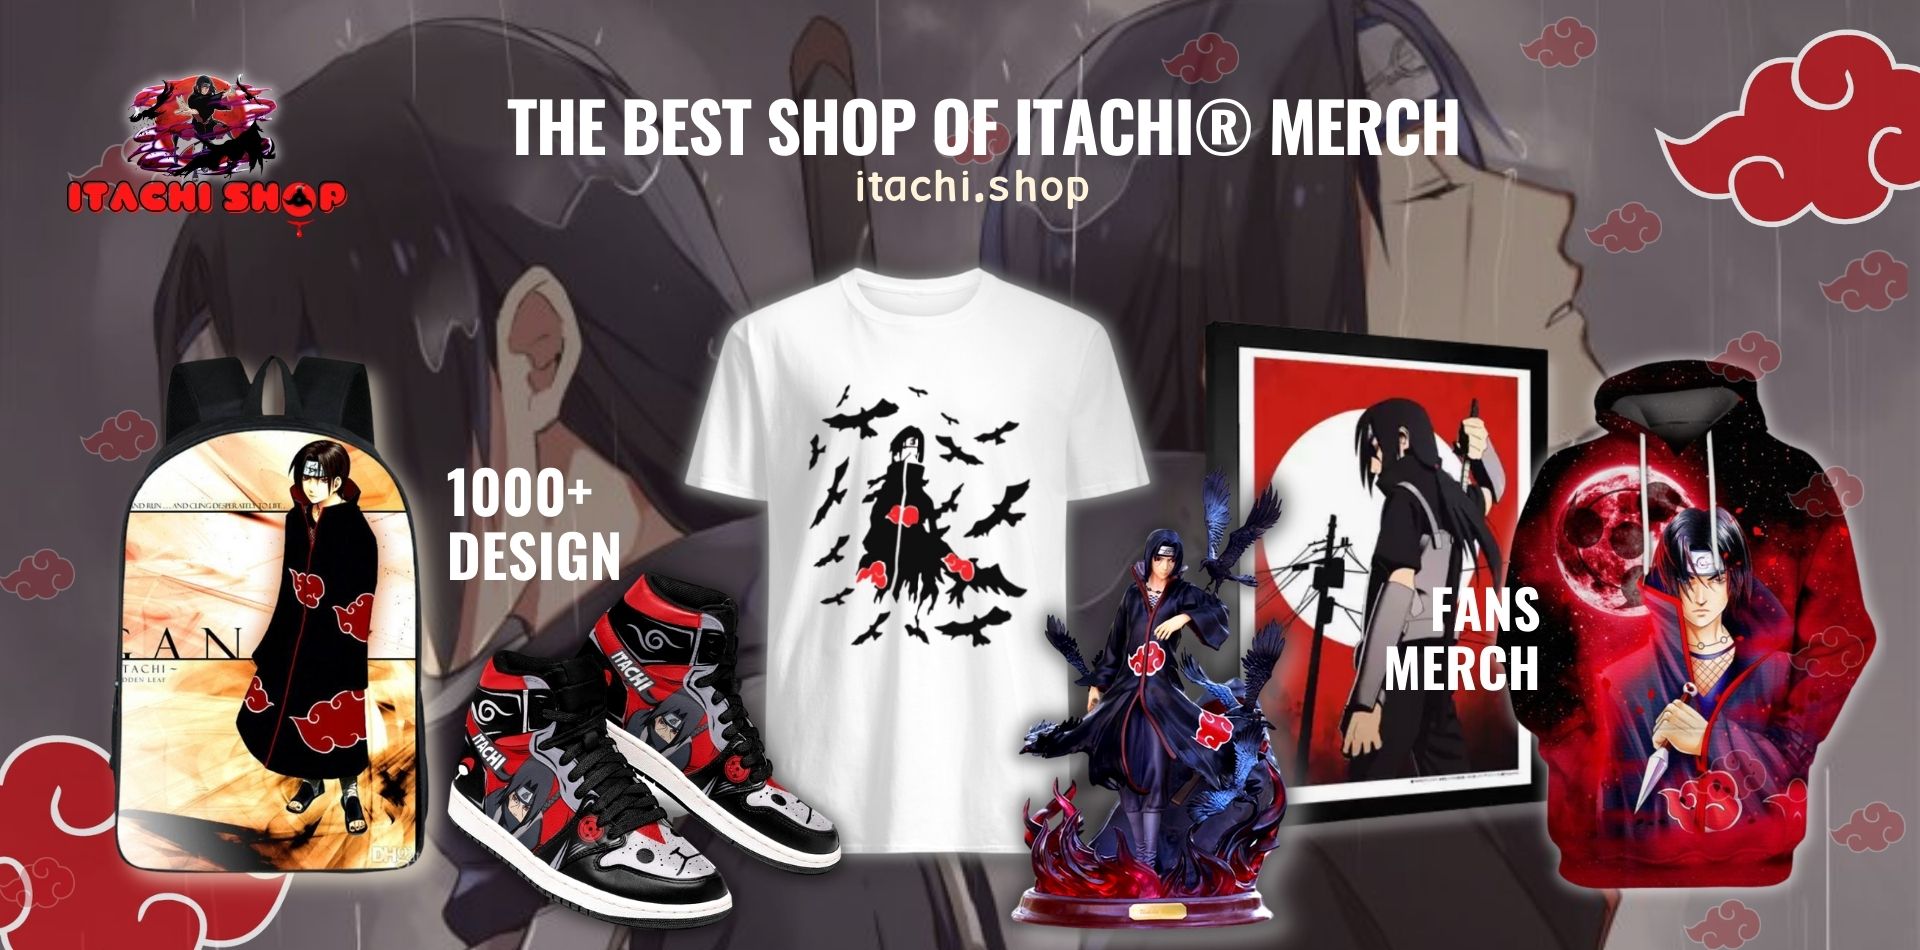 Itachi Shop Web Banner - Itachi Shop